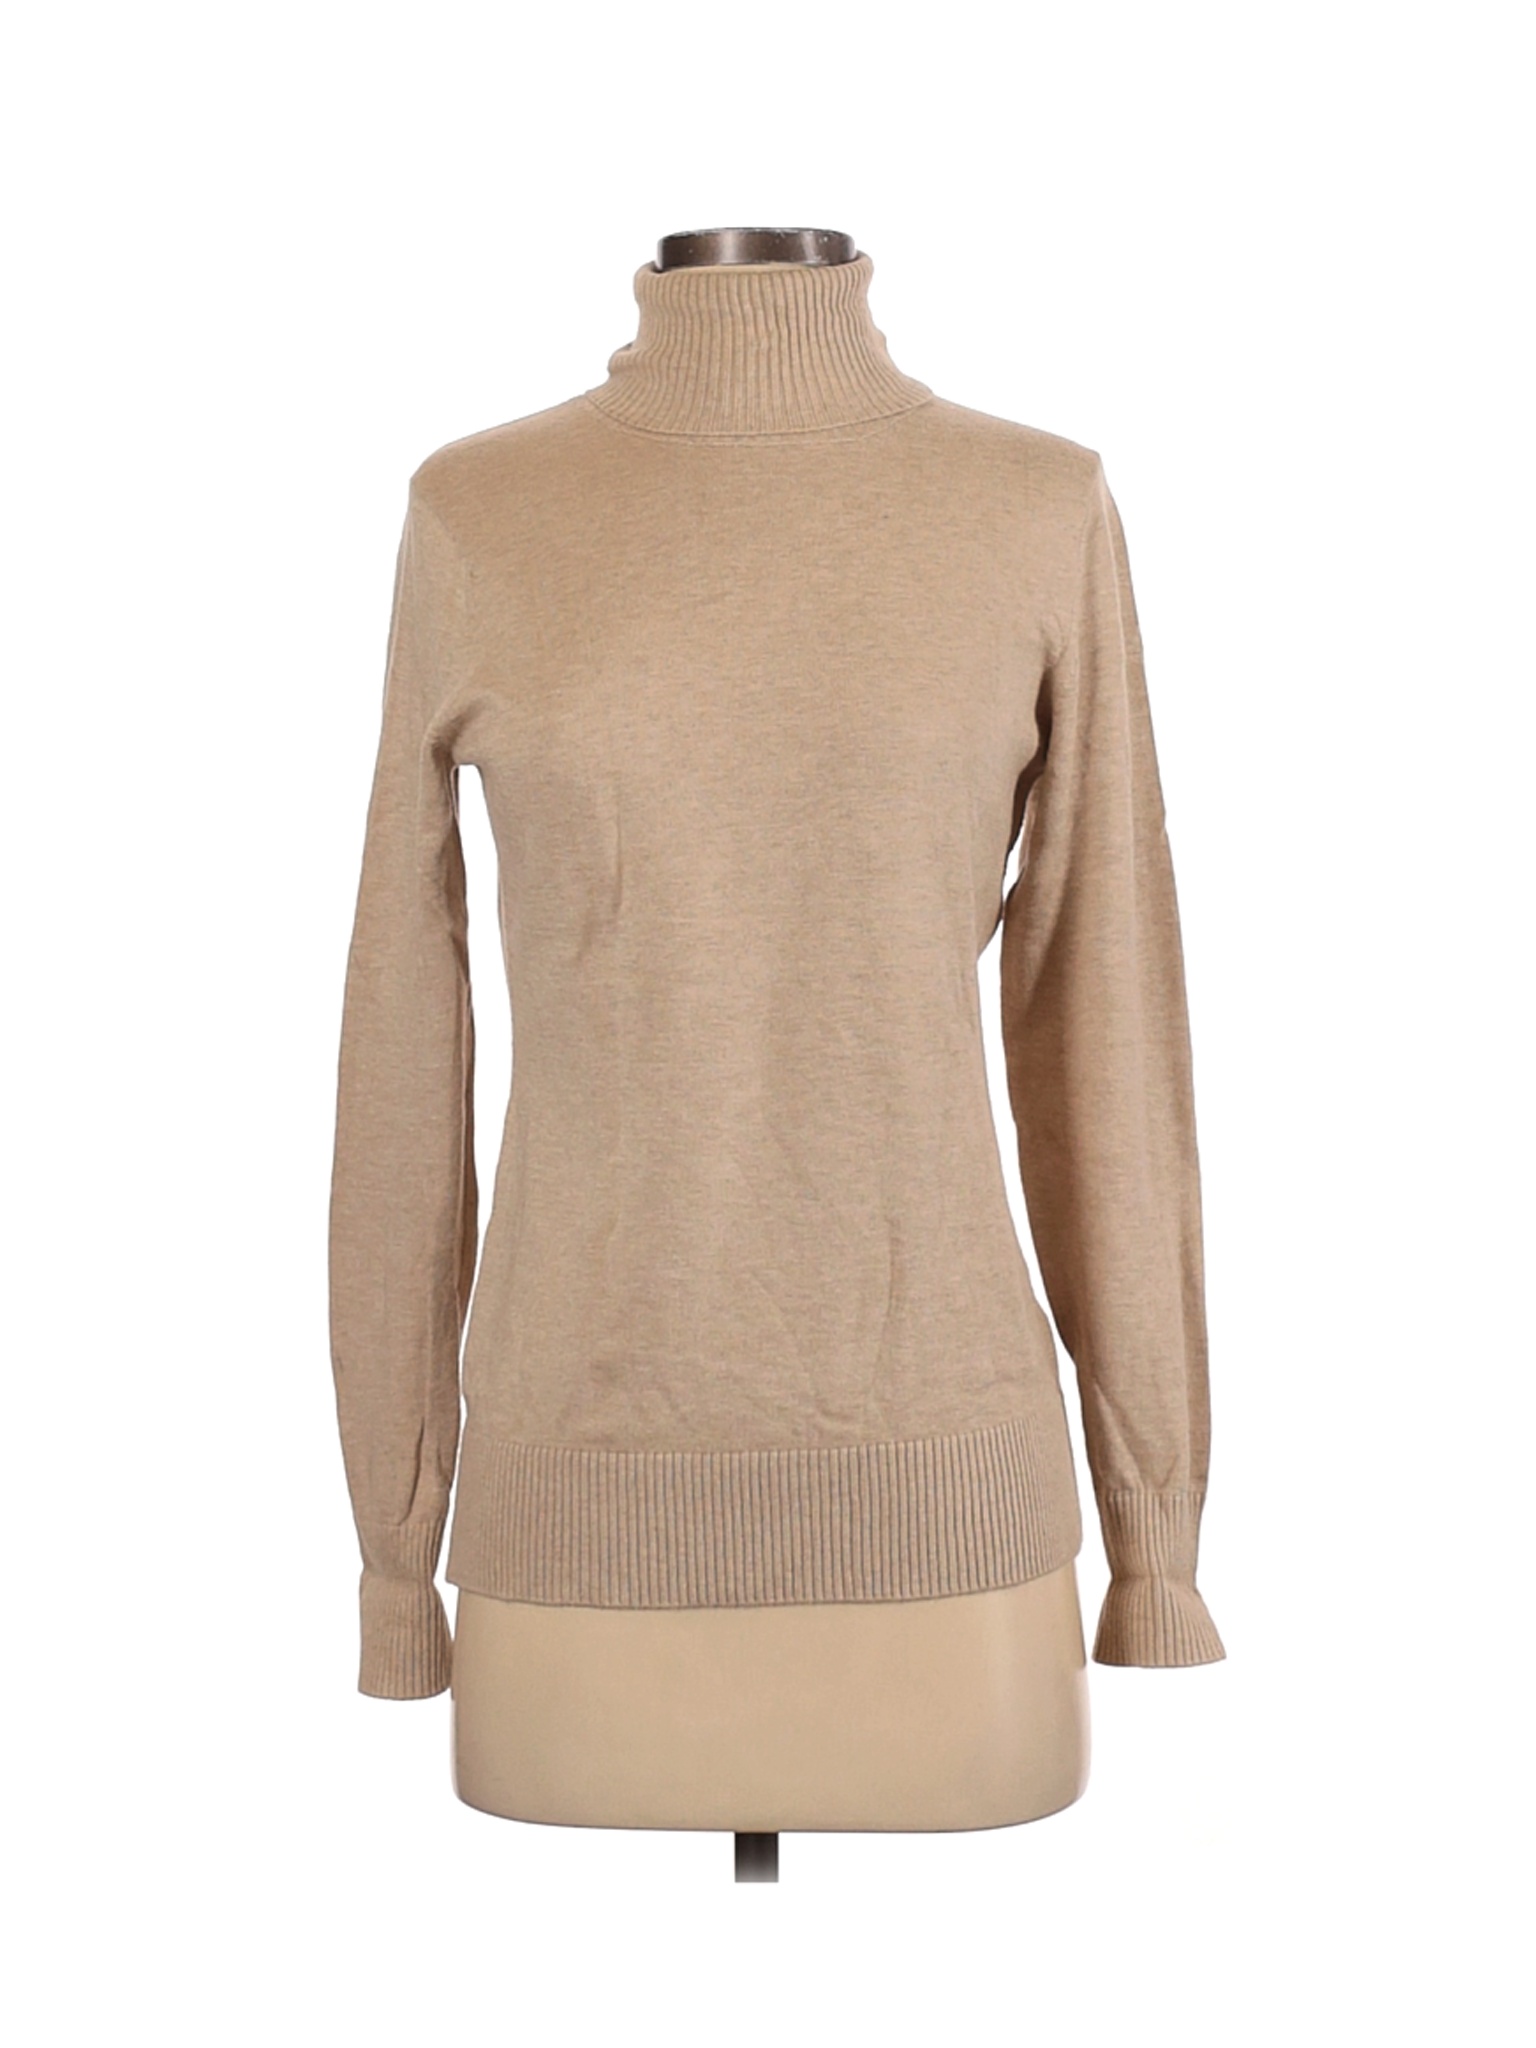 Banana Republic Factory Store Women Brown Turtleneck Sweater S | eBay